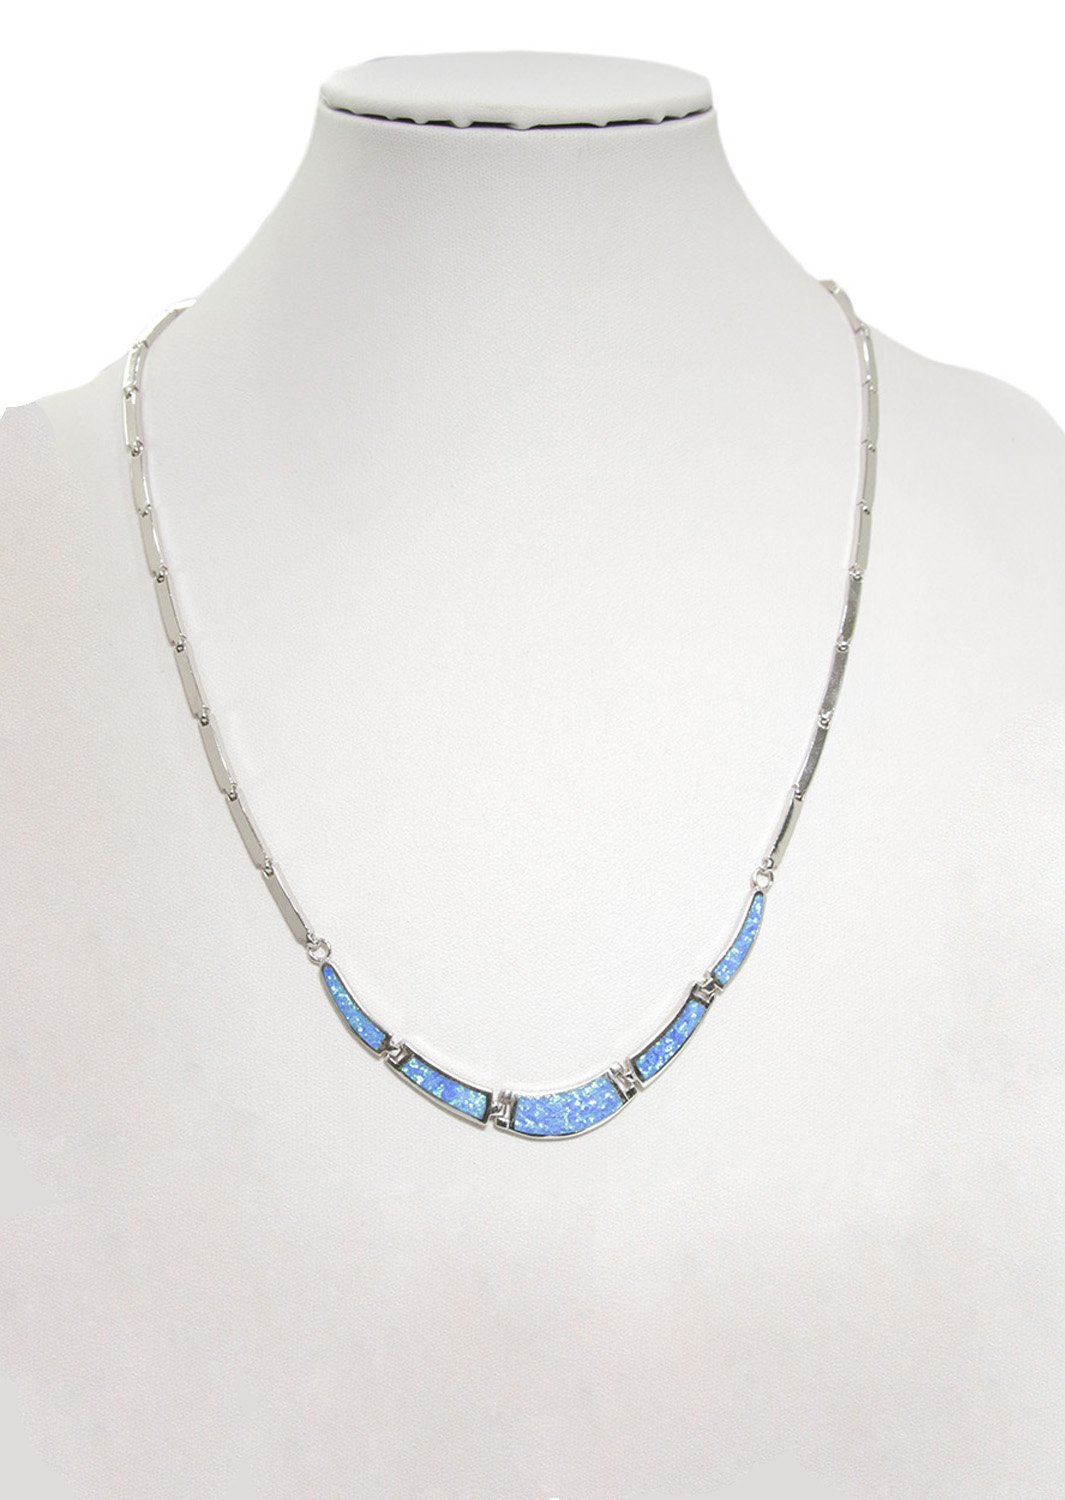 Blue opal silver necklace